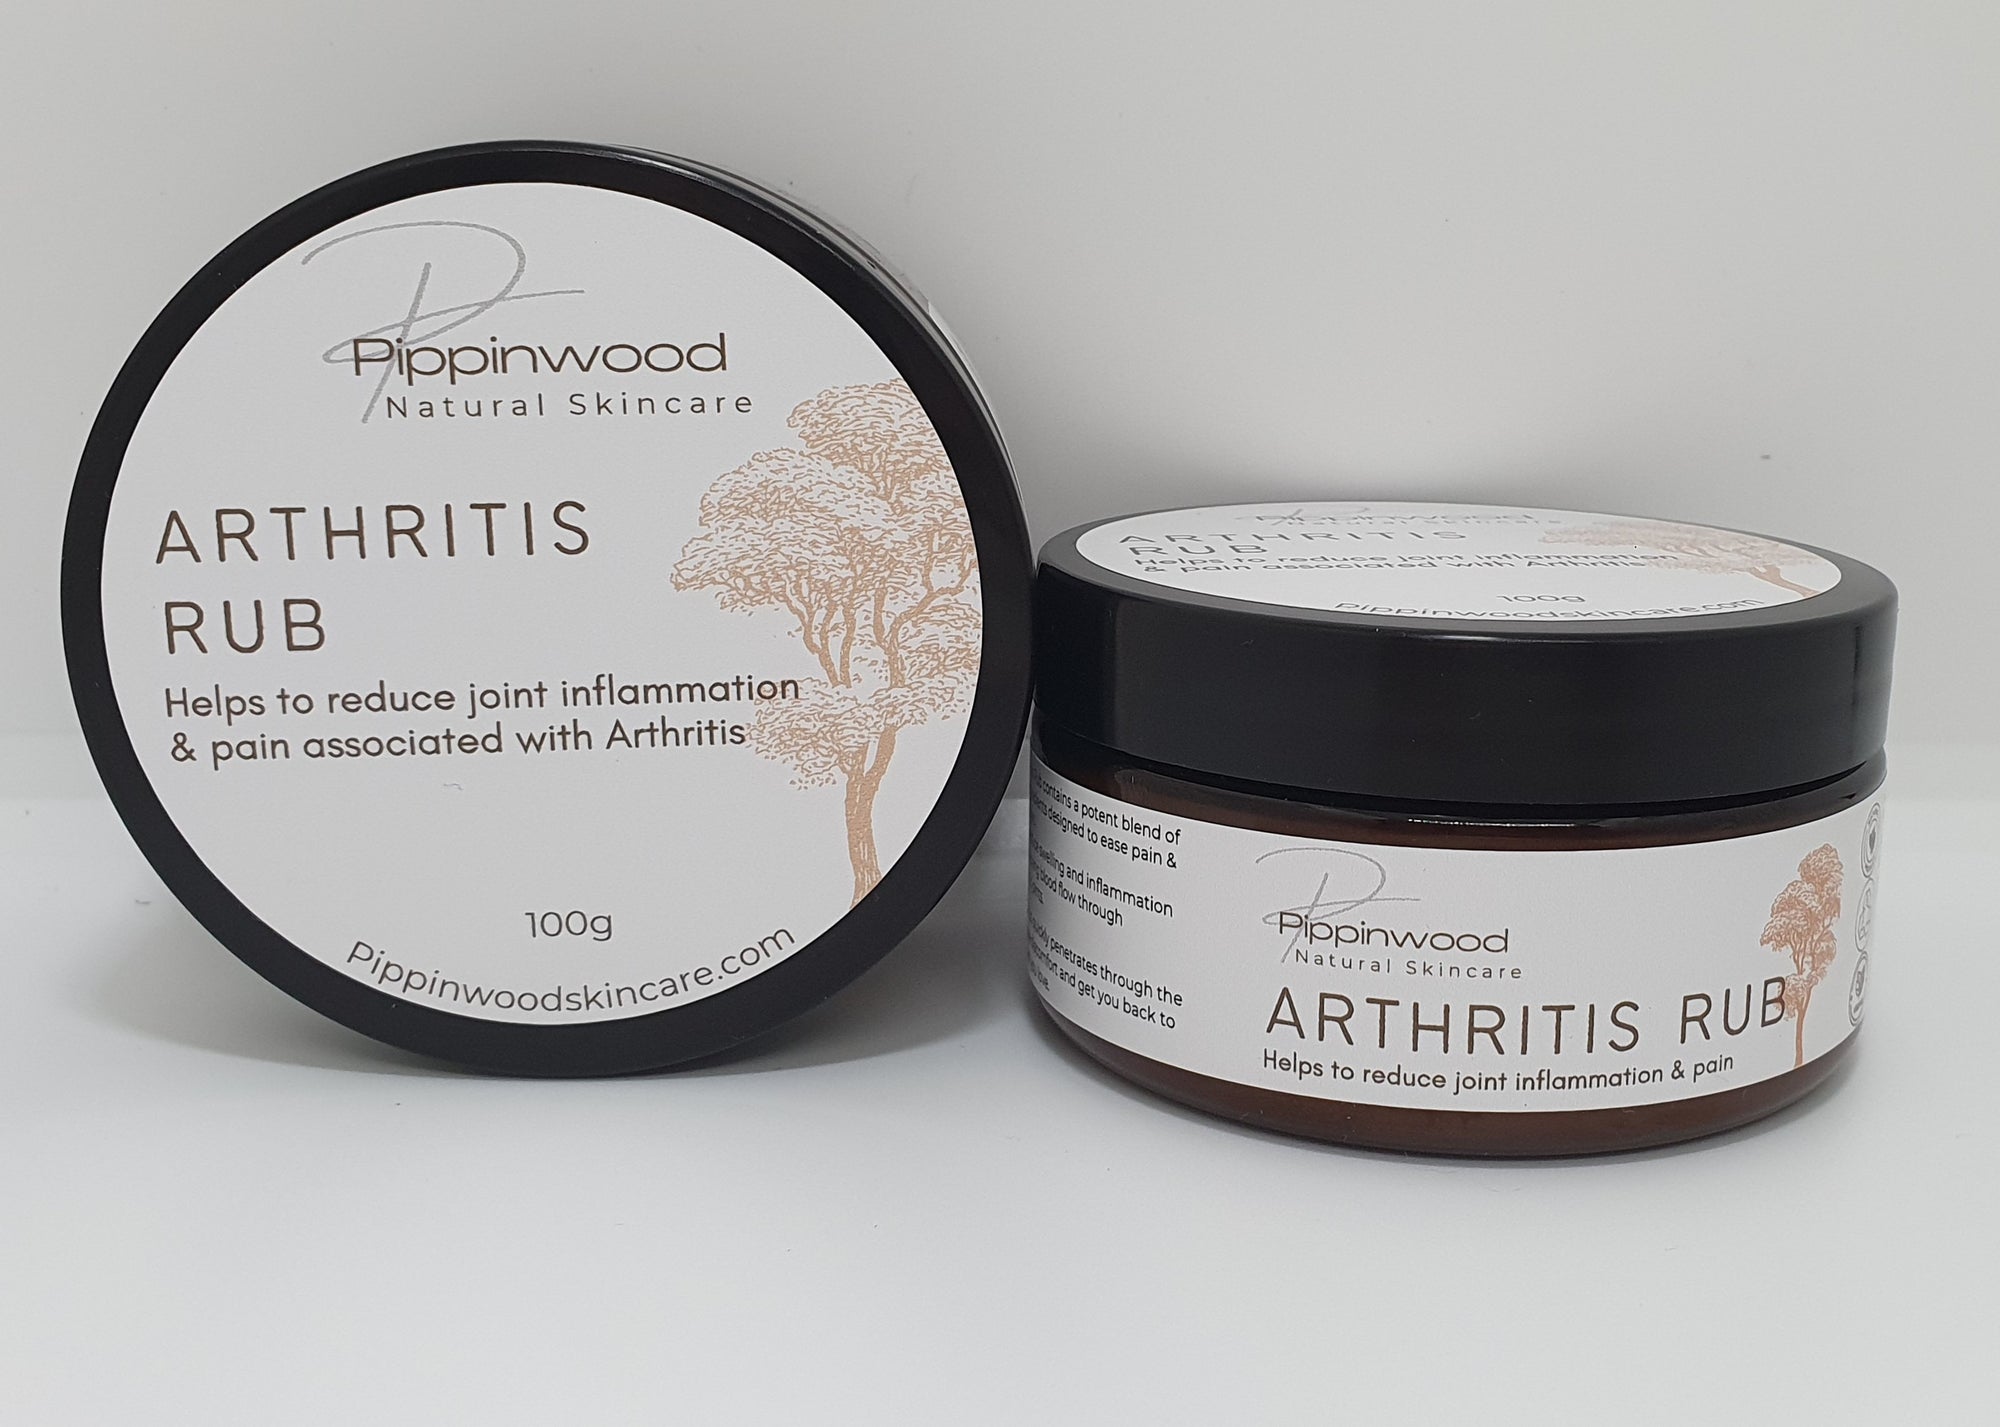 Pippinwood Natural Skincare Arthritis Rub